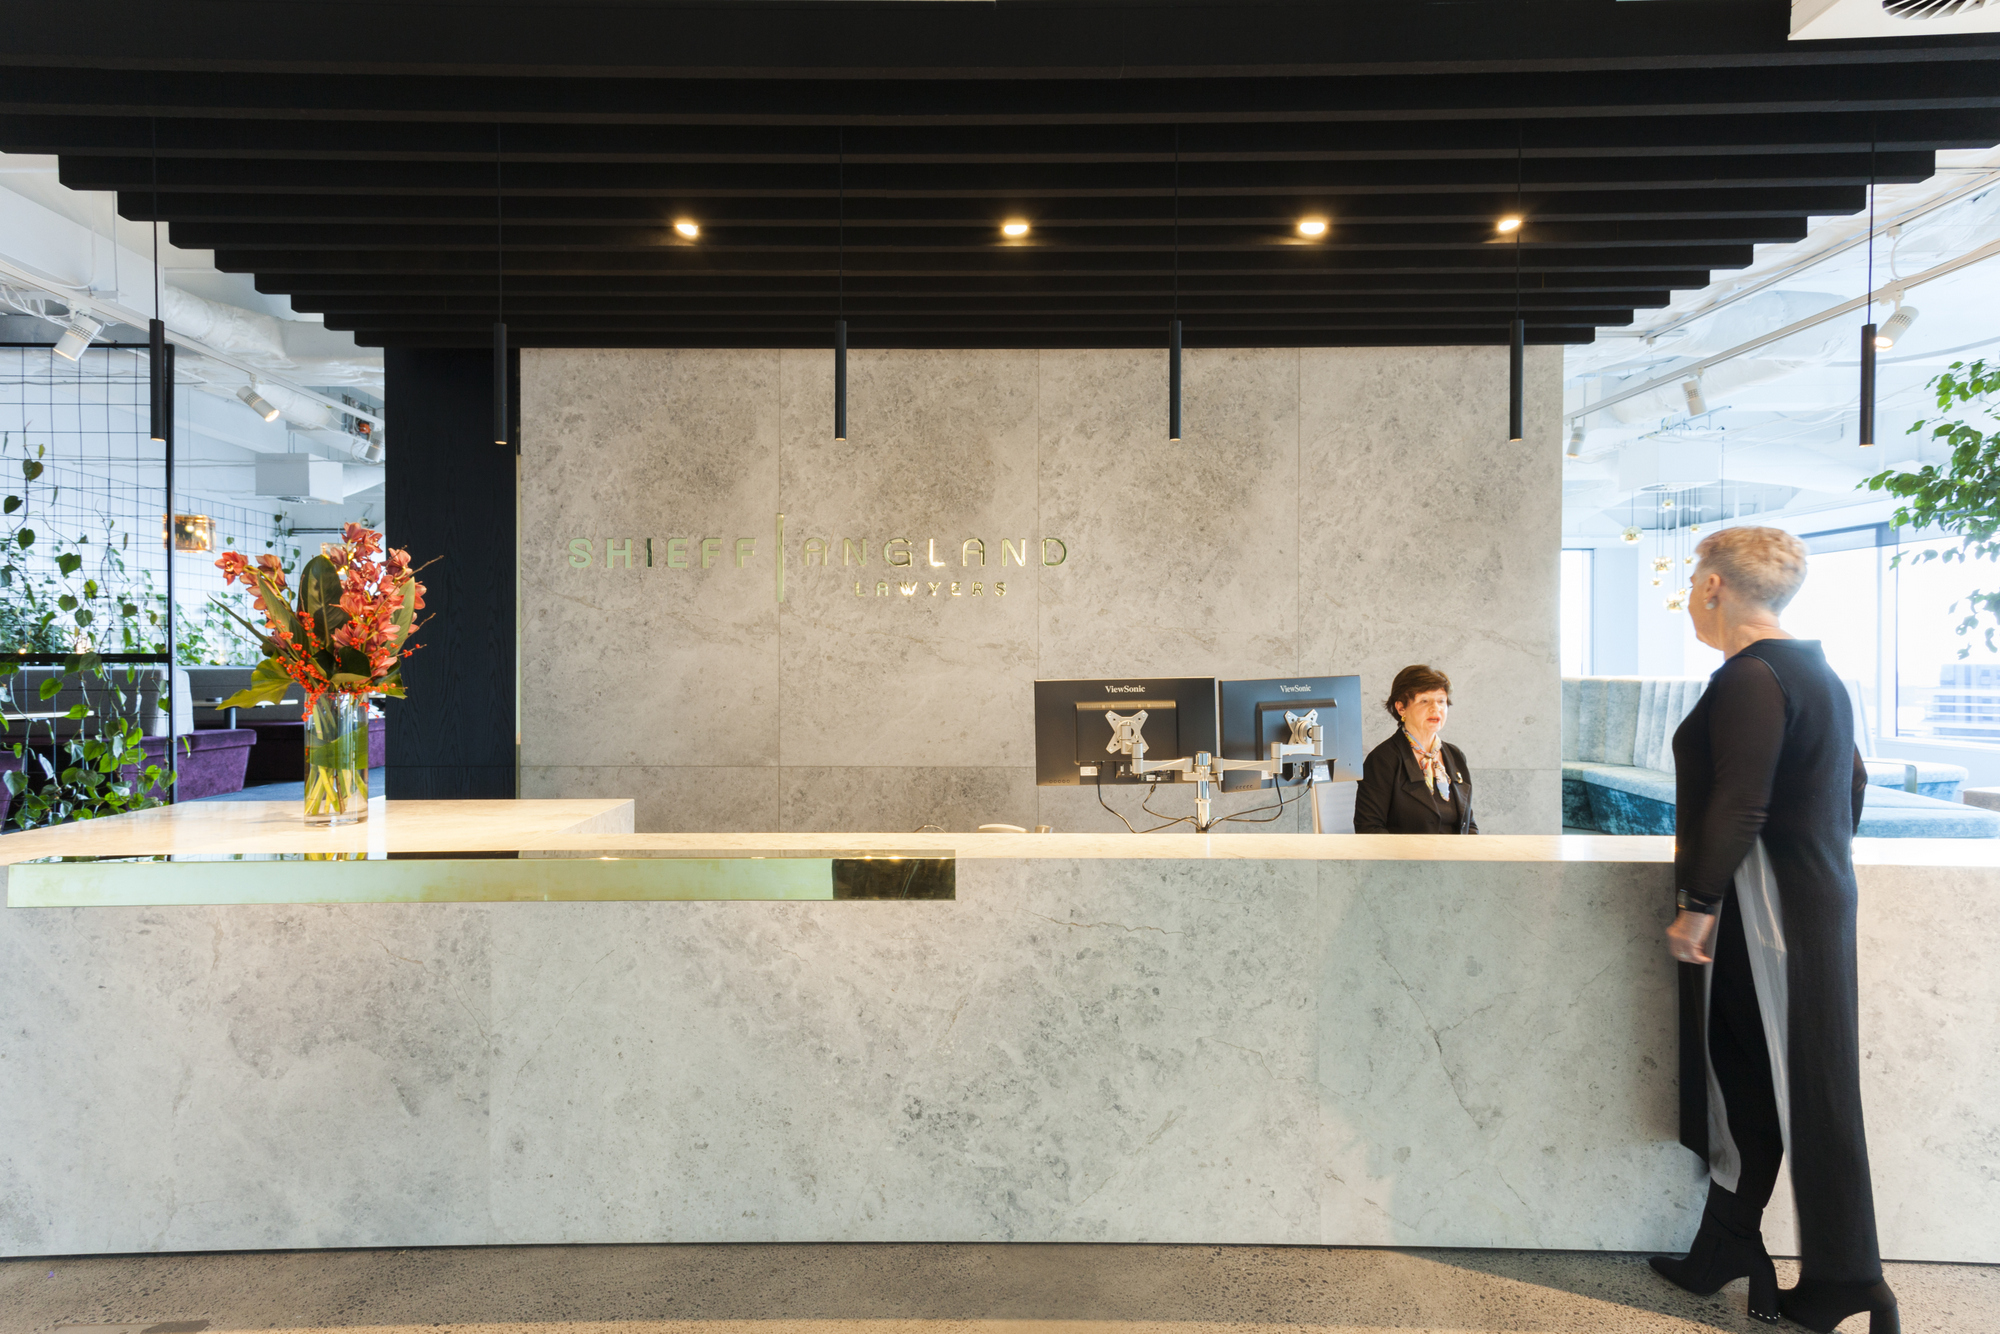 Shieff Angland办公室-奥克兰|ART-Arrakis | 建筑室内设计的创新与灵感